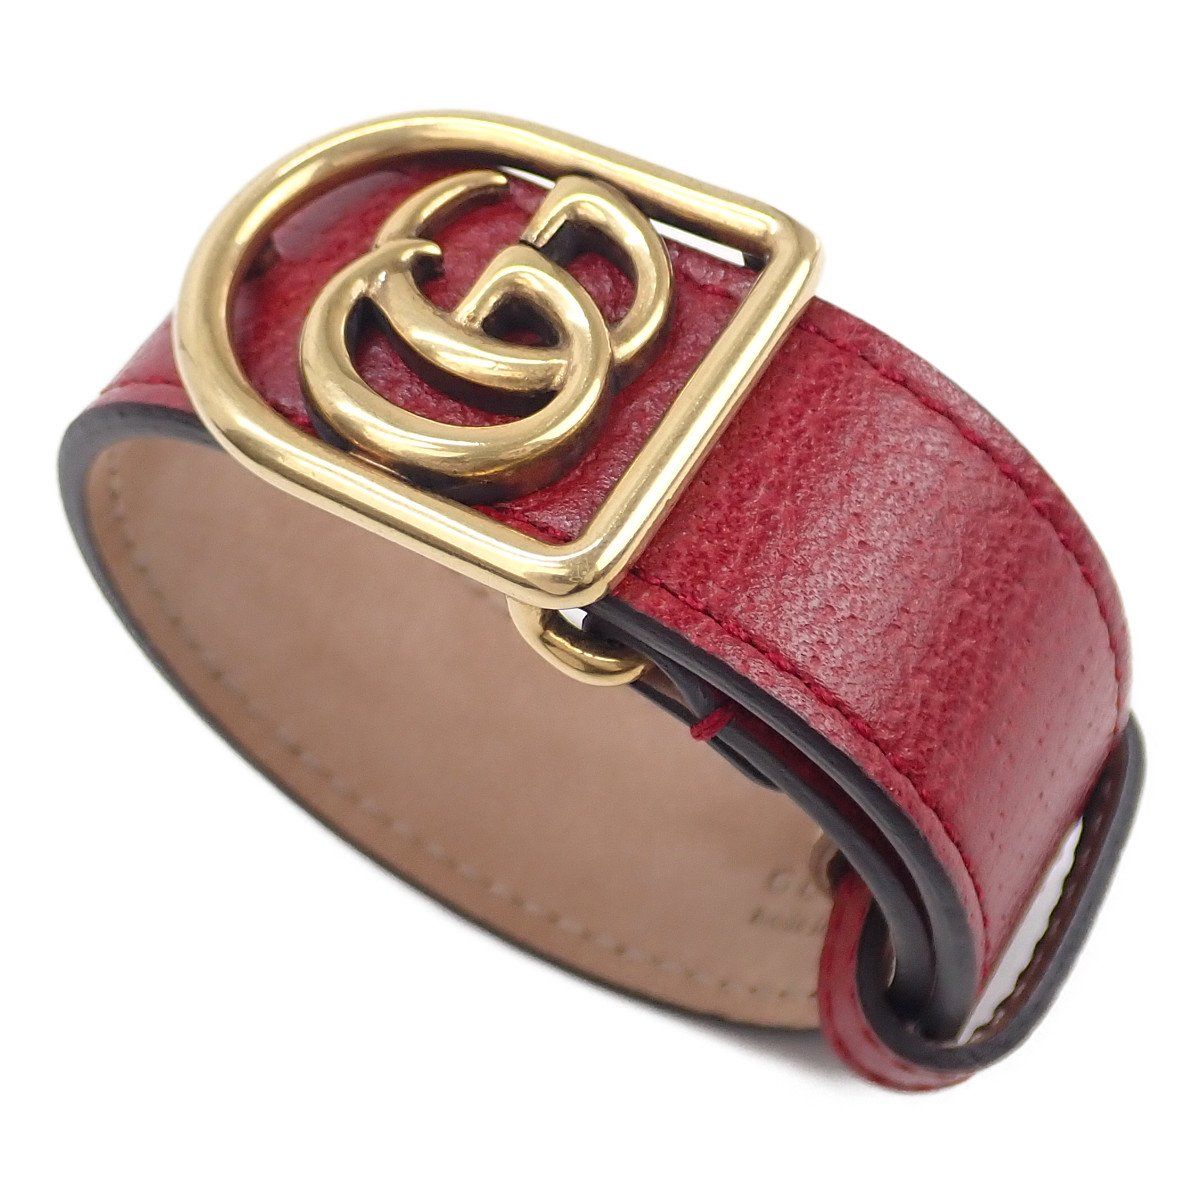 GG Marmont Bracelet